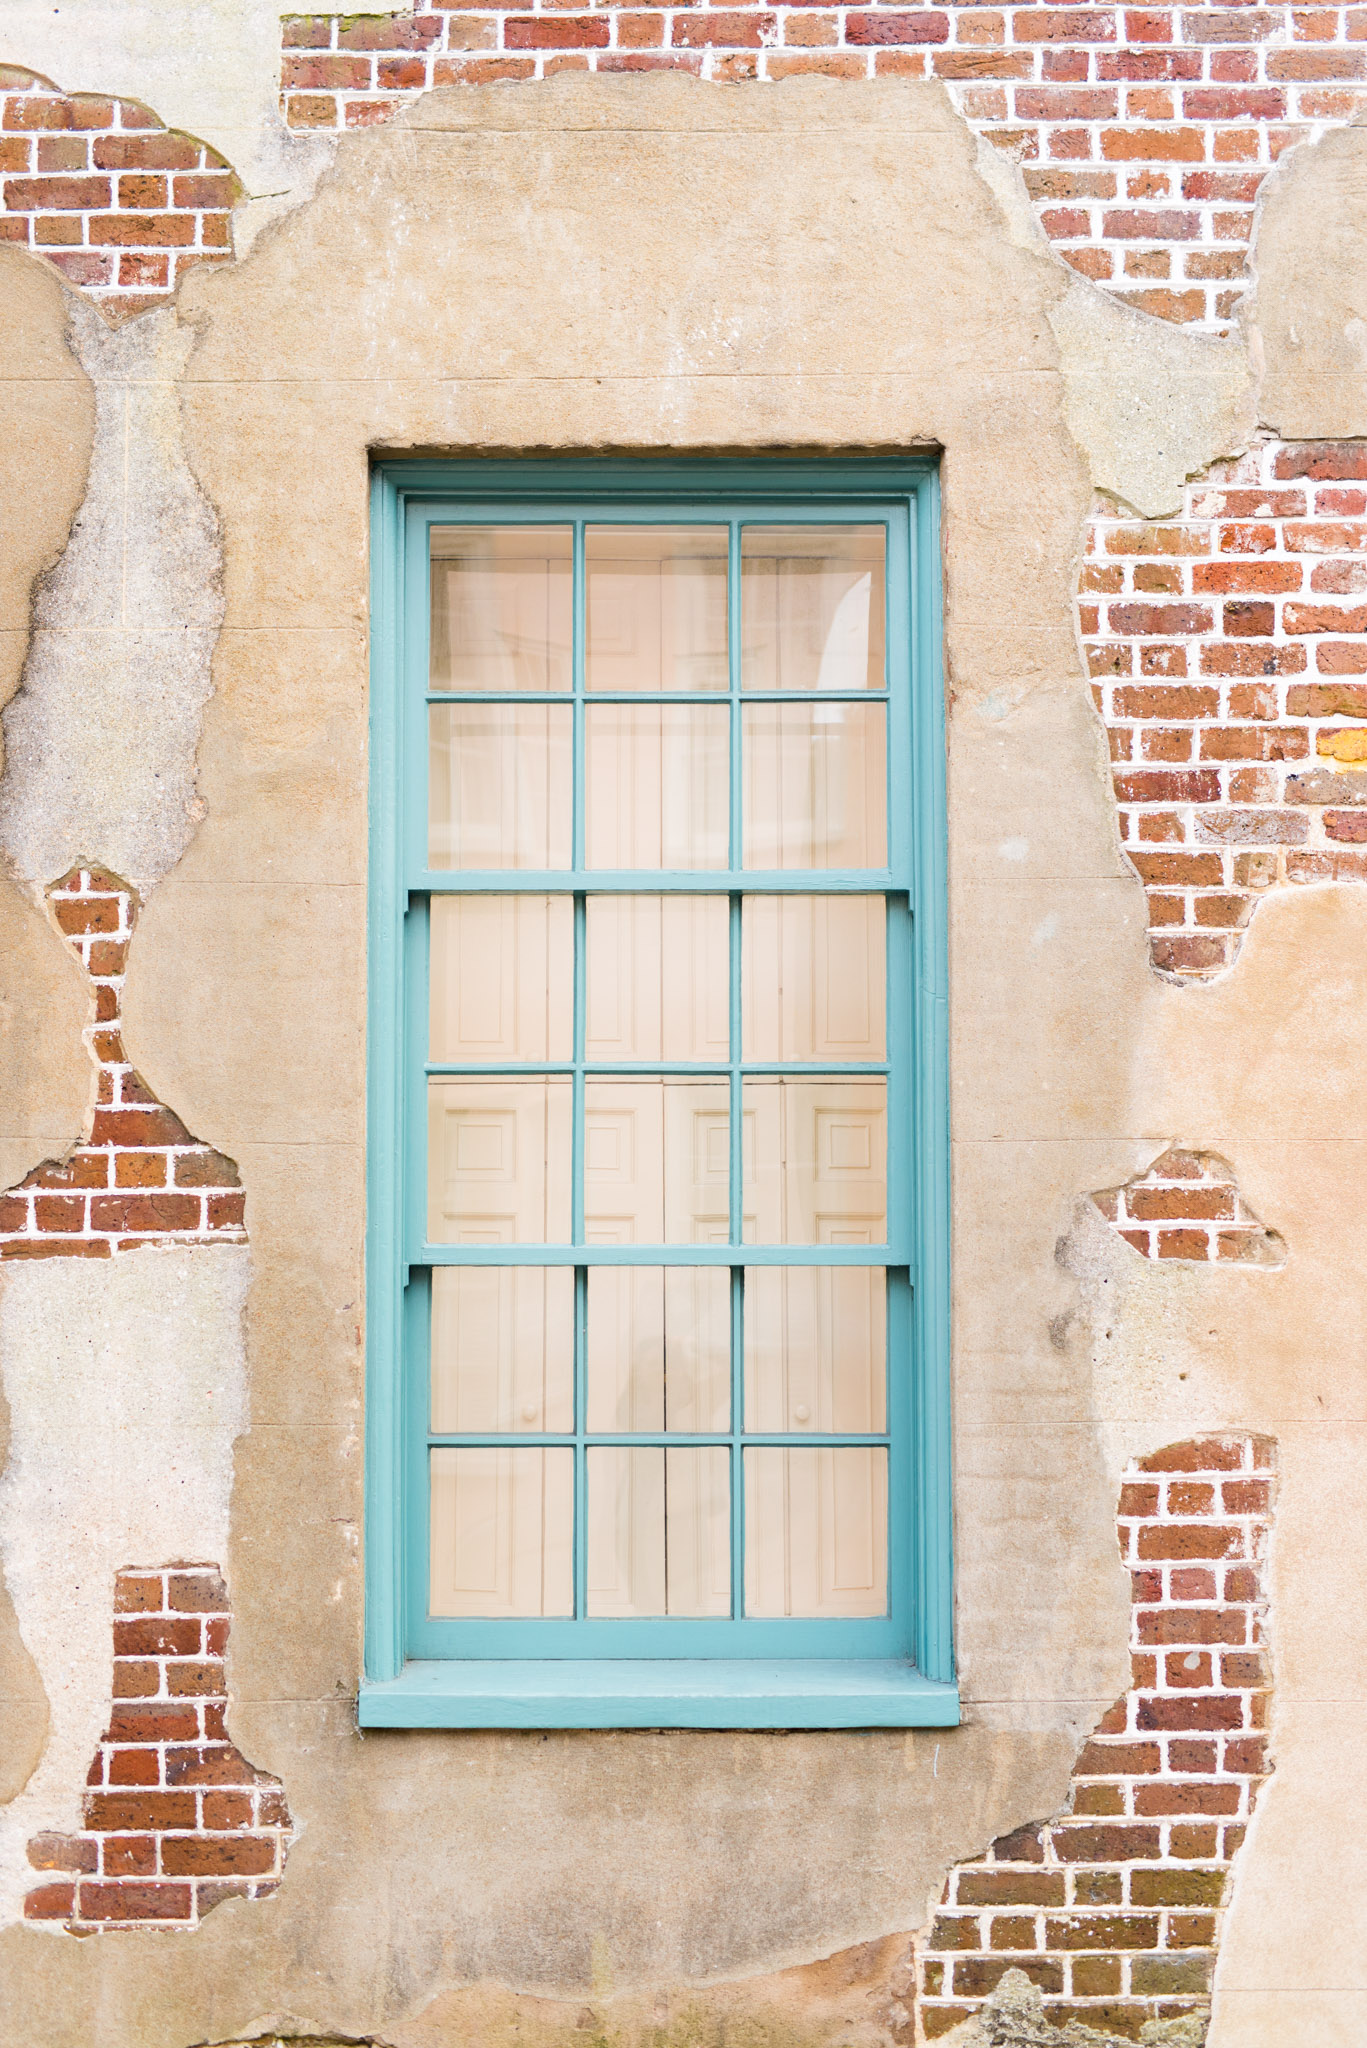 blue window in old brick building